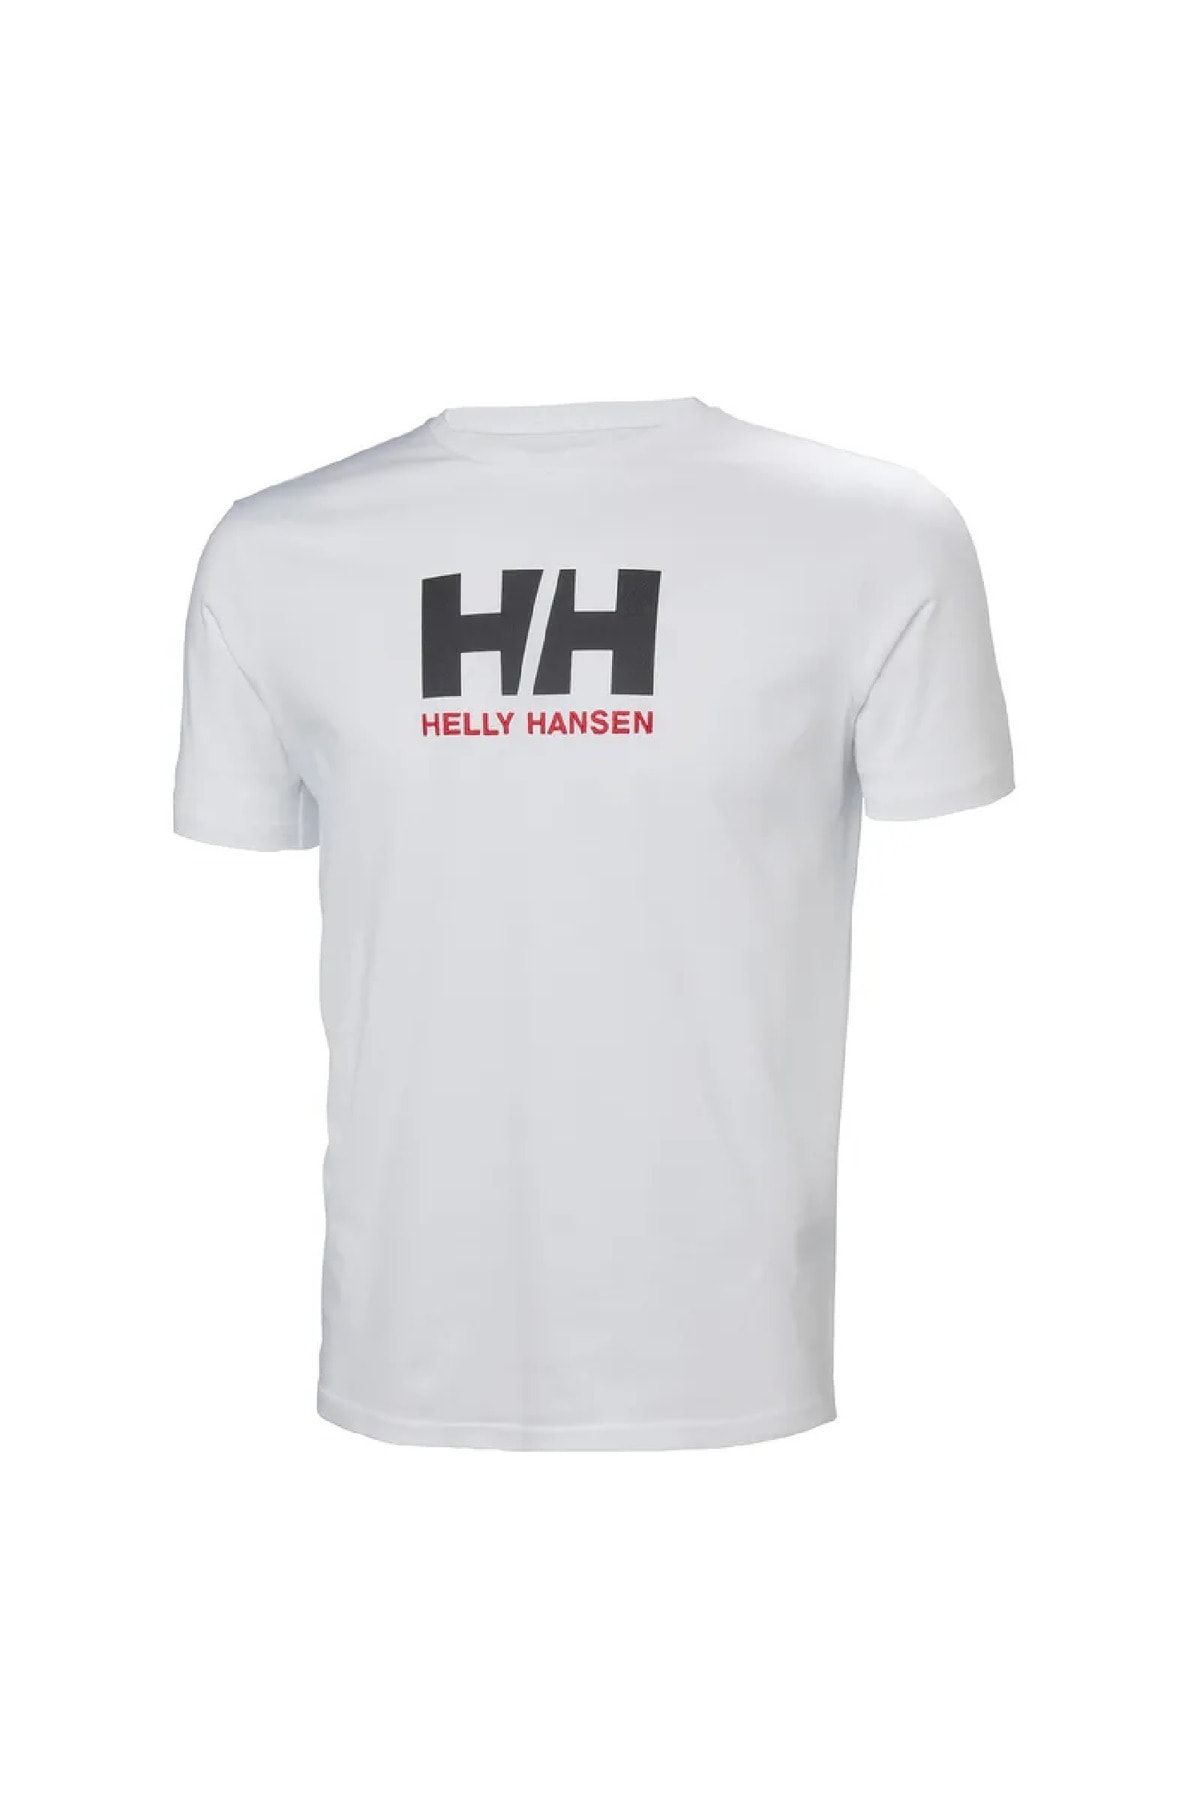 Helly Hansen Hh Logo Bisiklet Yaka Erkek T-shirt Hha.33979-001